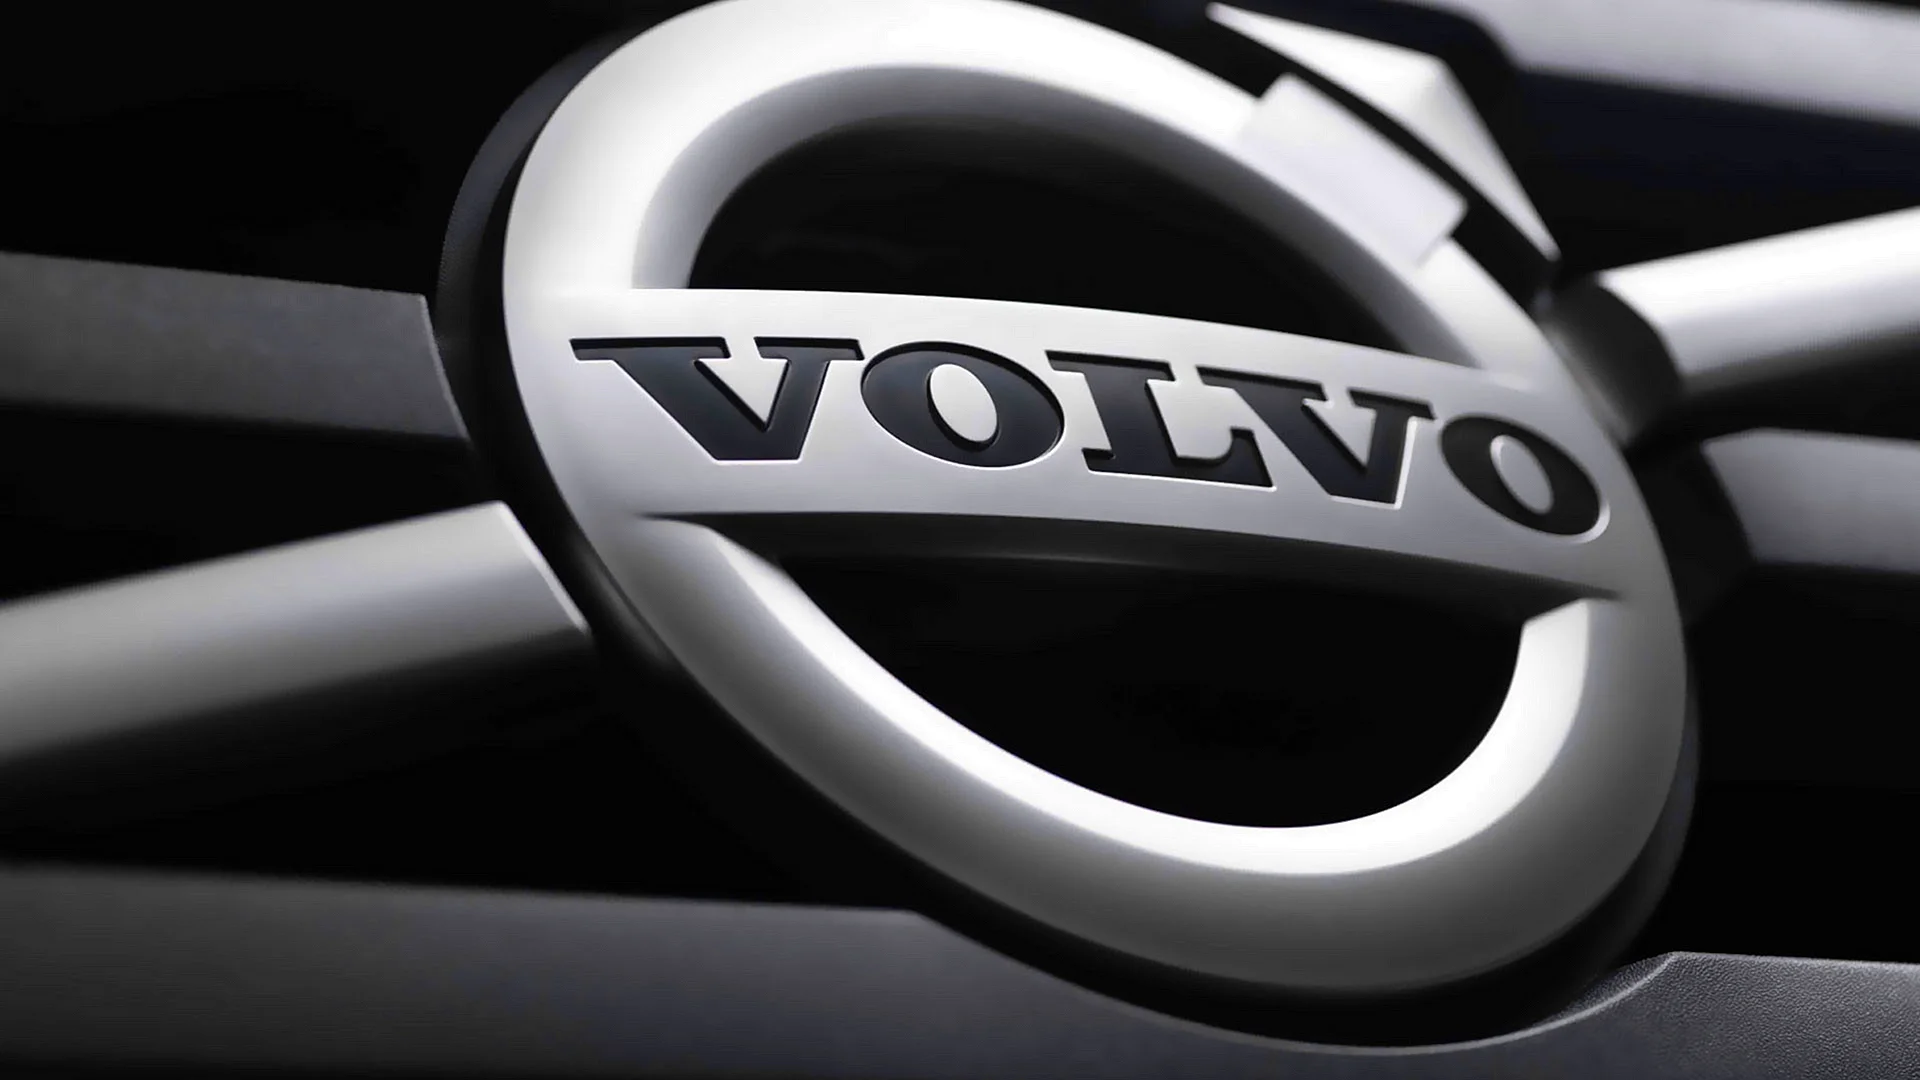 Volvo Logo Wallpaper